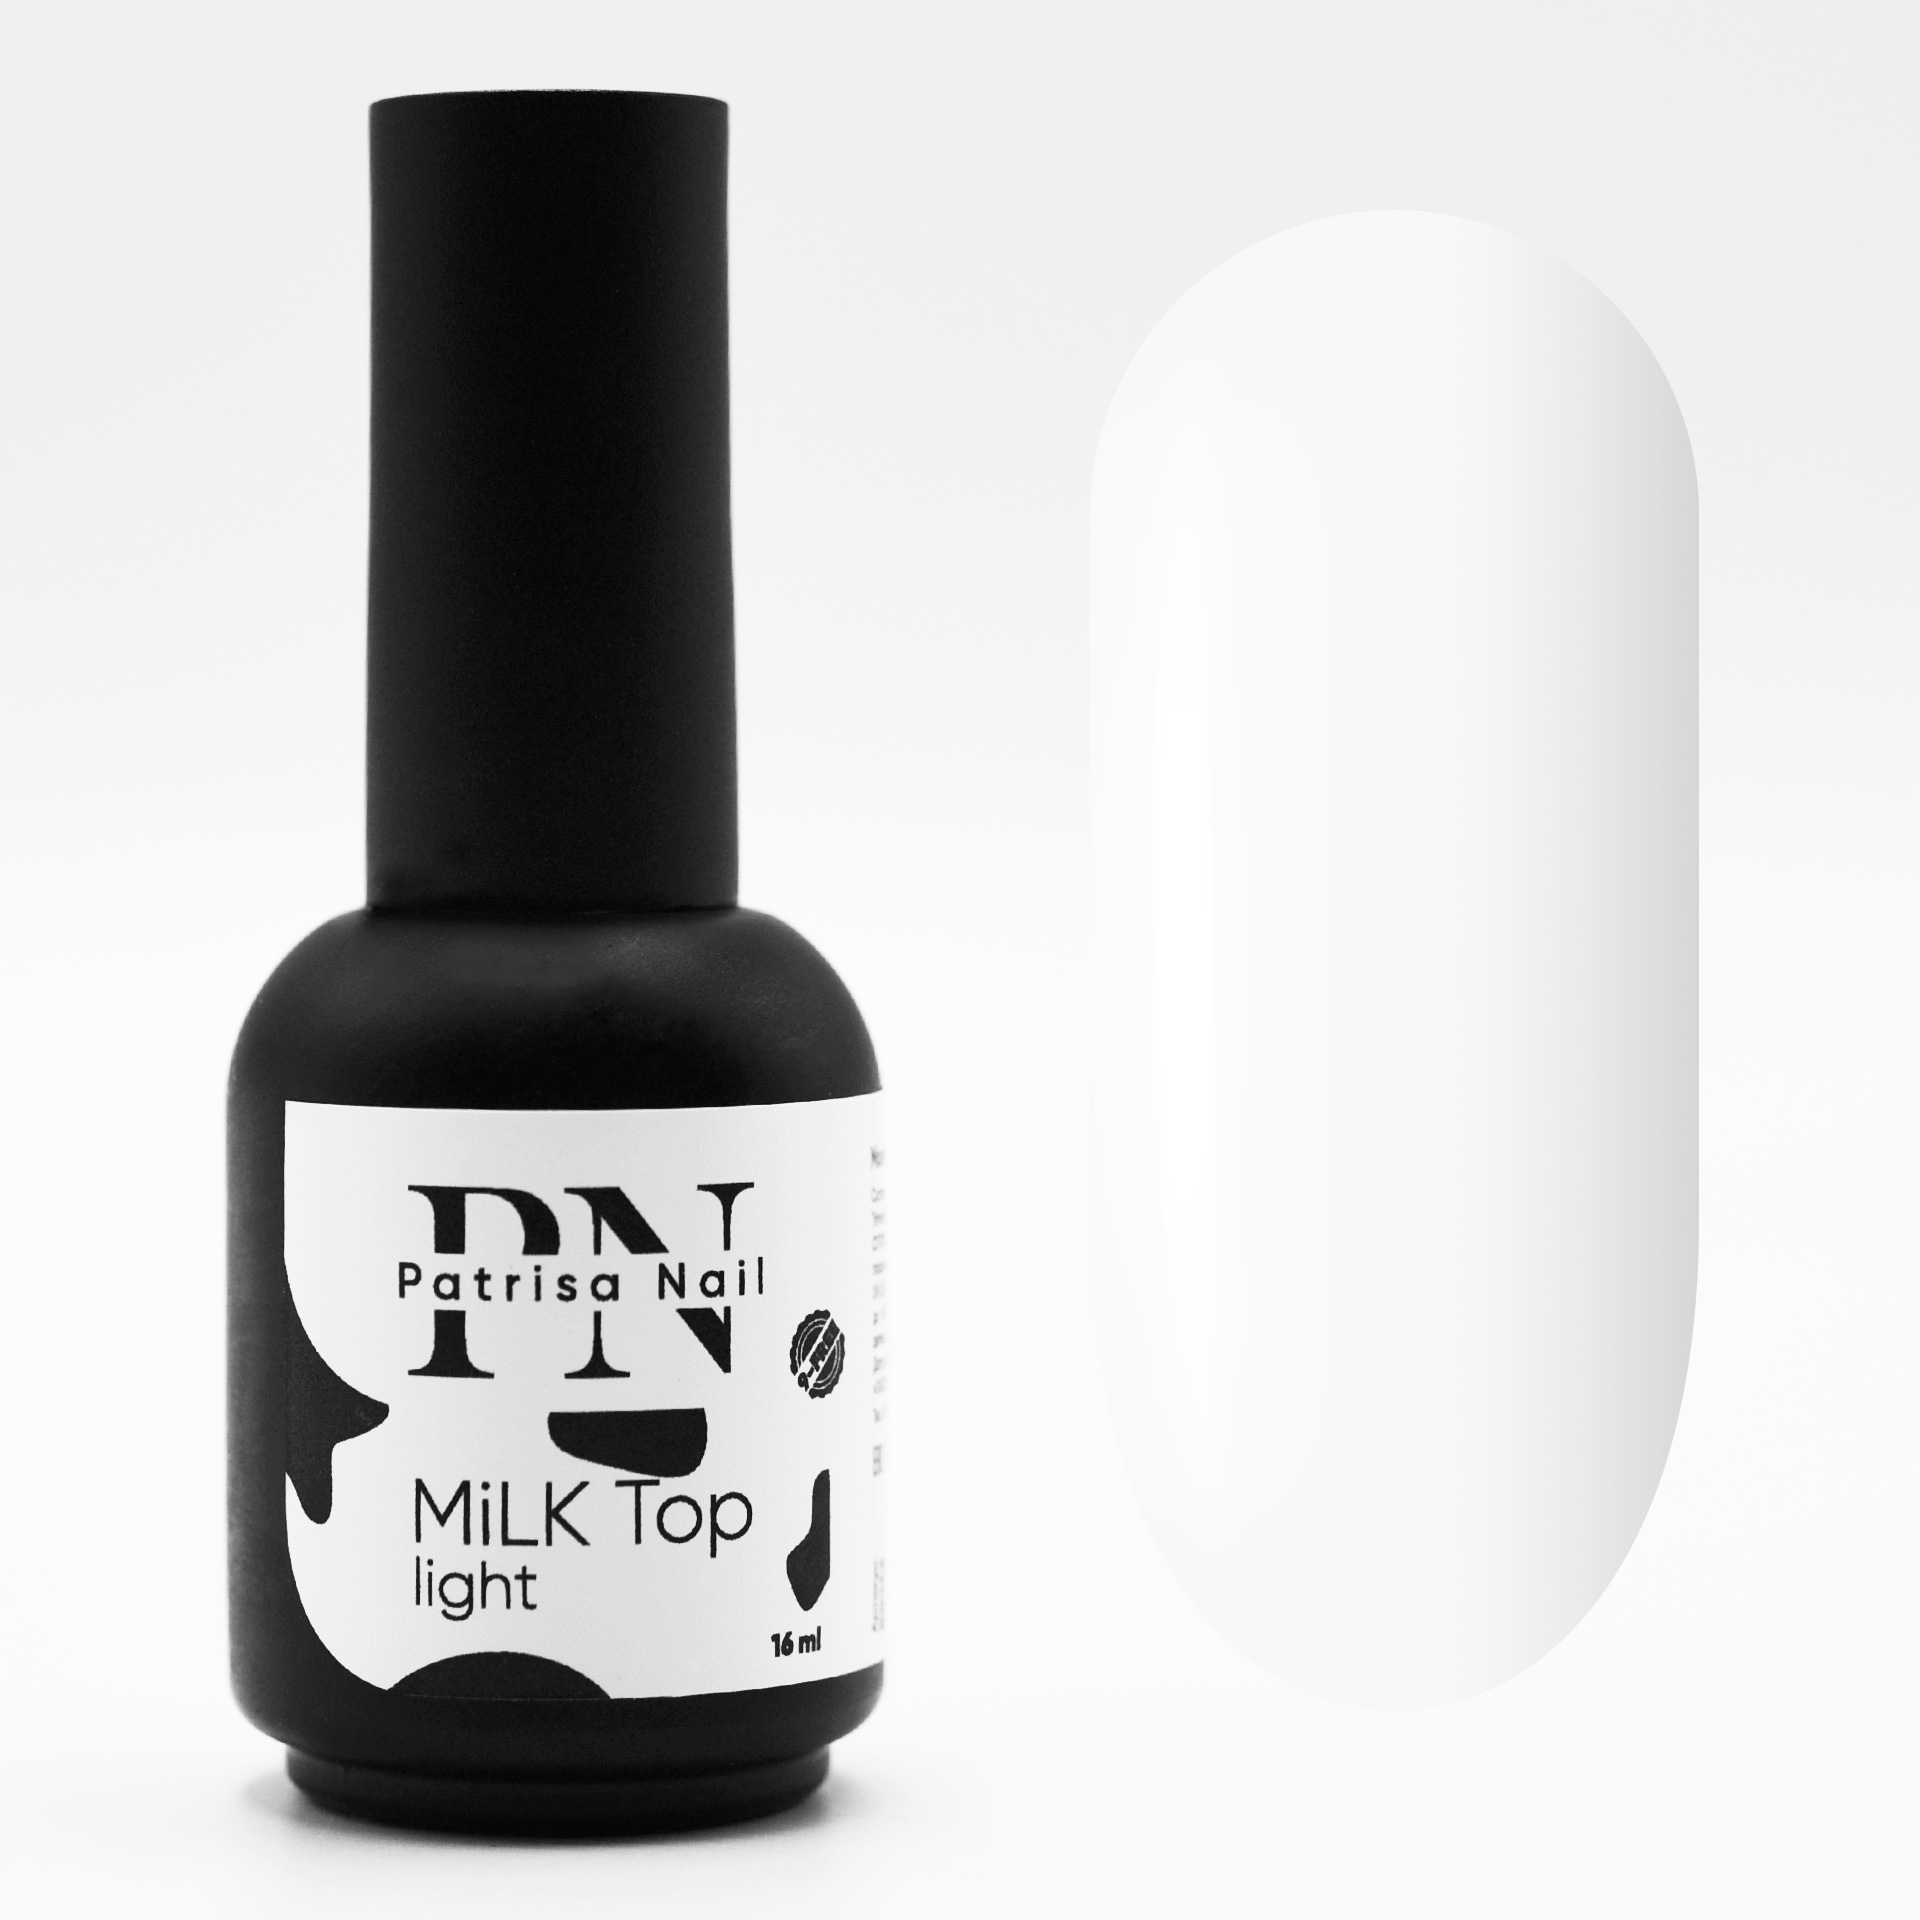 Milk Top Light молочный топ Patrisa Nail, 16 мл